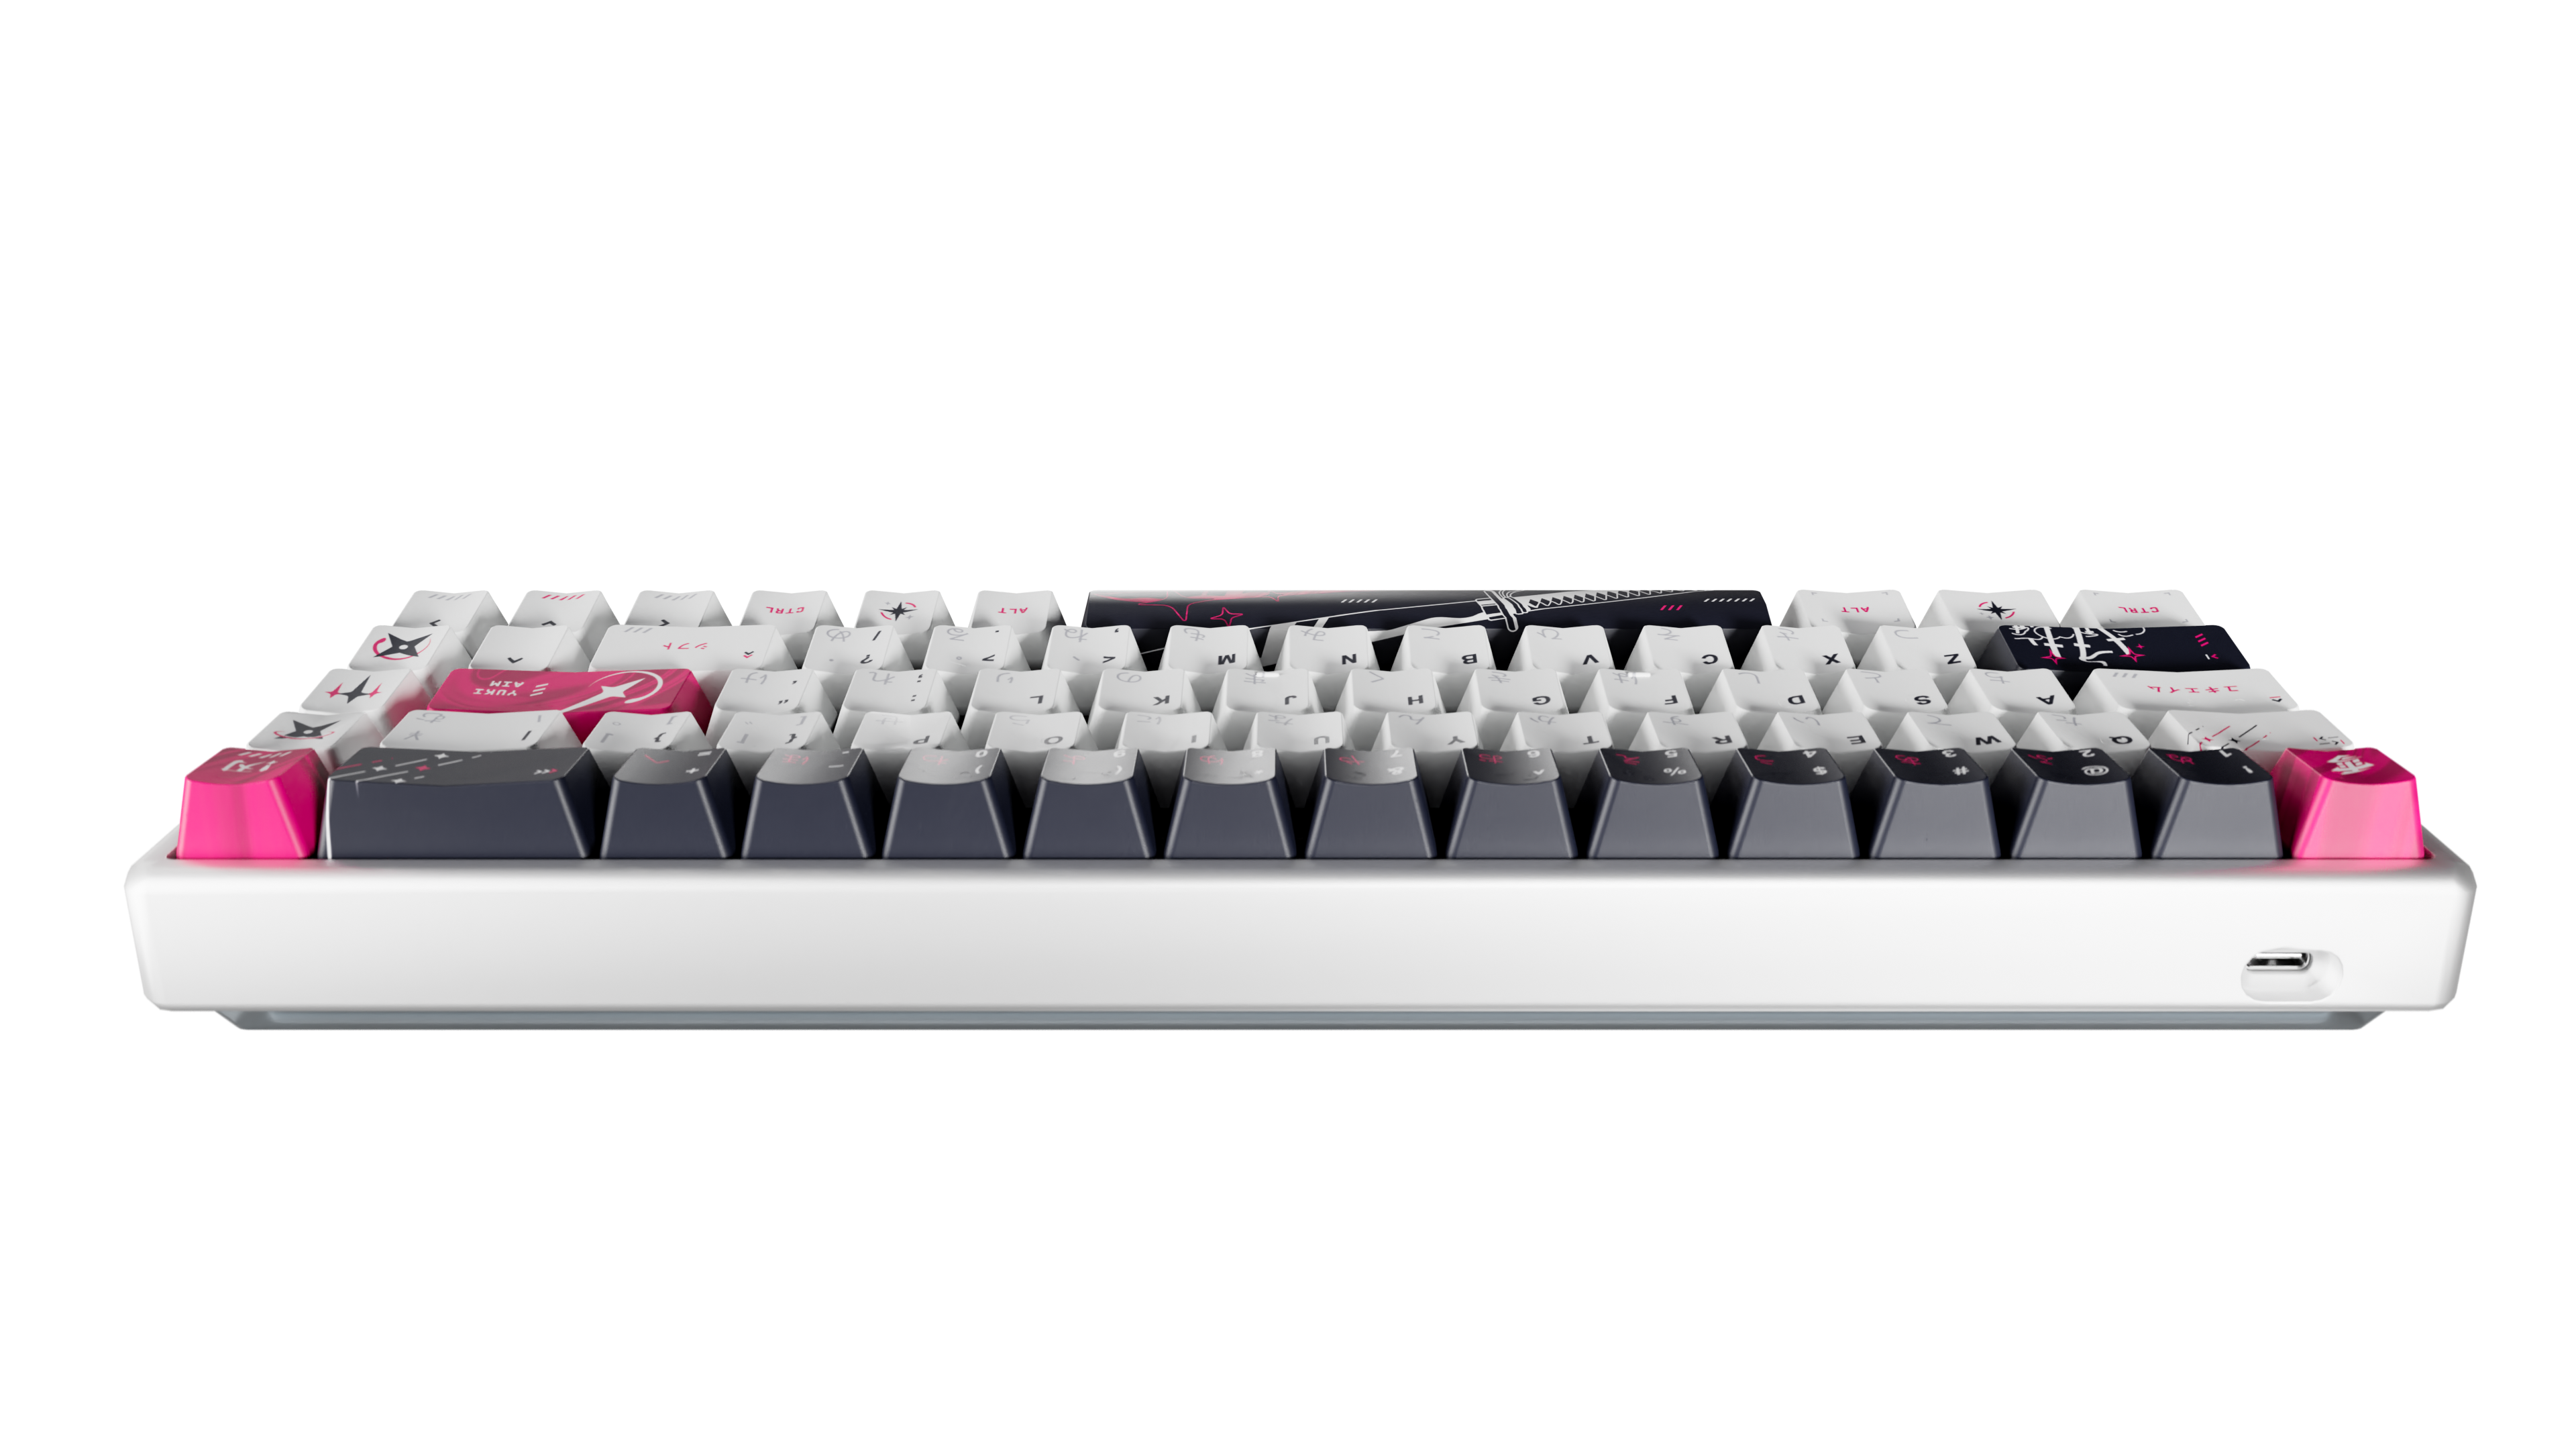 Yuki Aim Hall Effect Magnetic 65% Gaming Keyboard (Batch 2 PRE-ORDER)